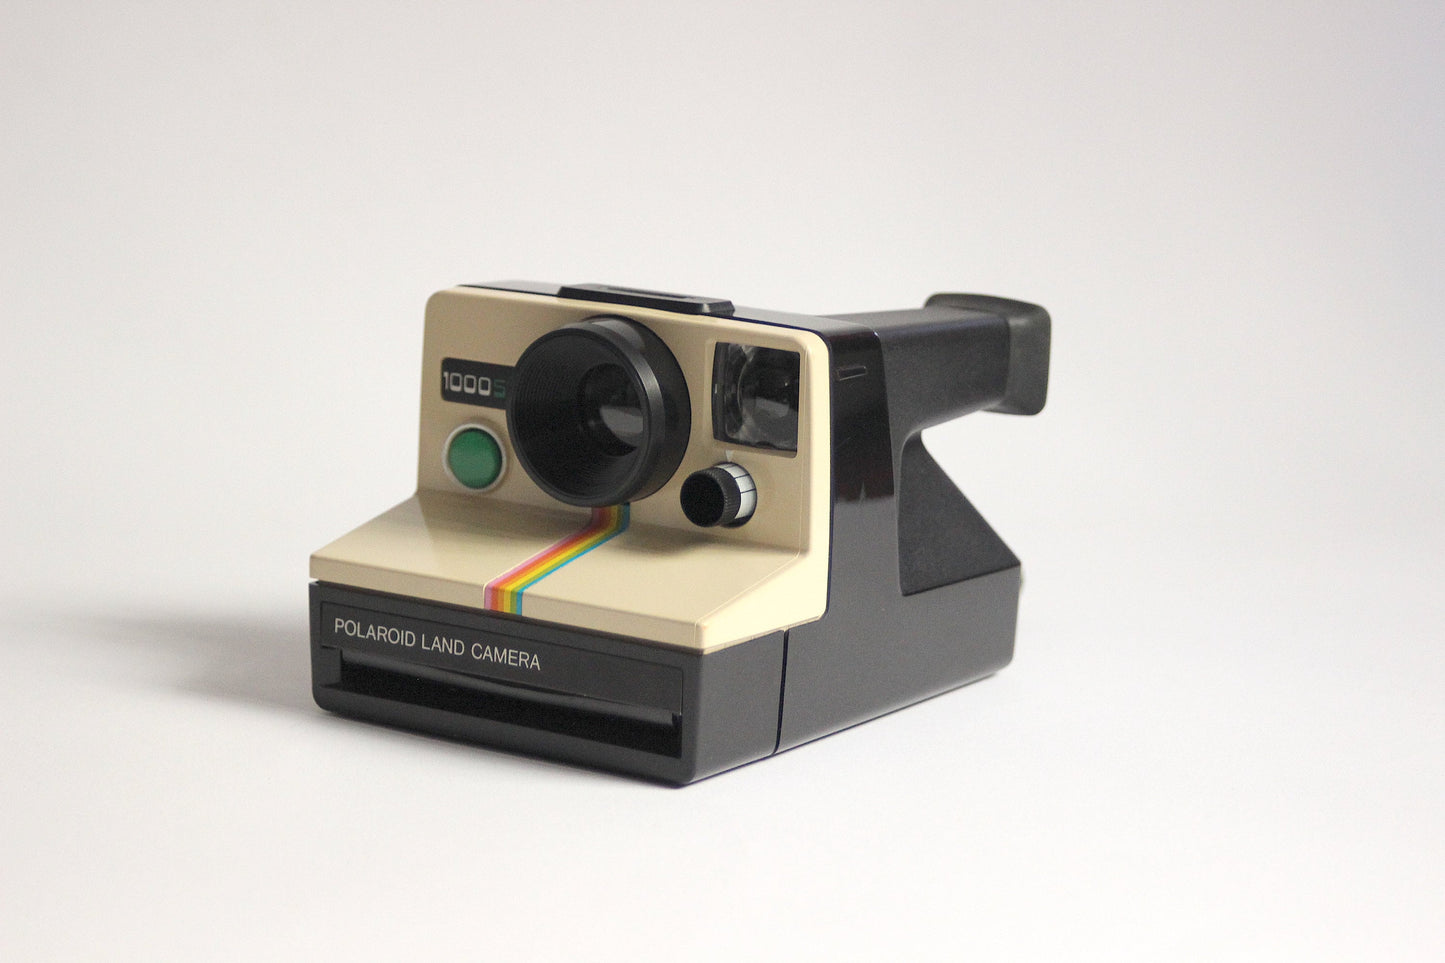 Polaroid 1000SE Land Camera special edition 1976 - green button - Includes original box and original instructions book